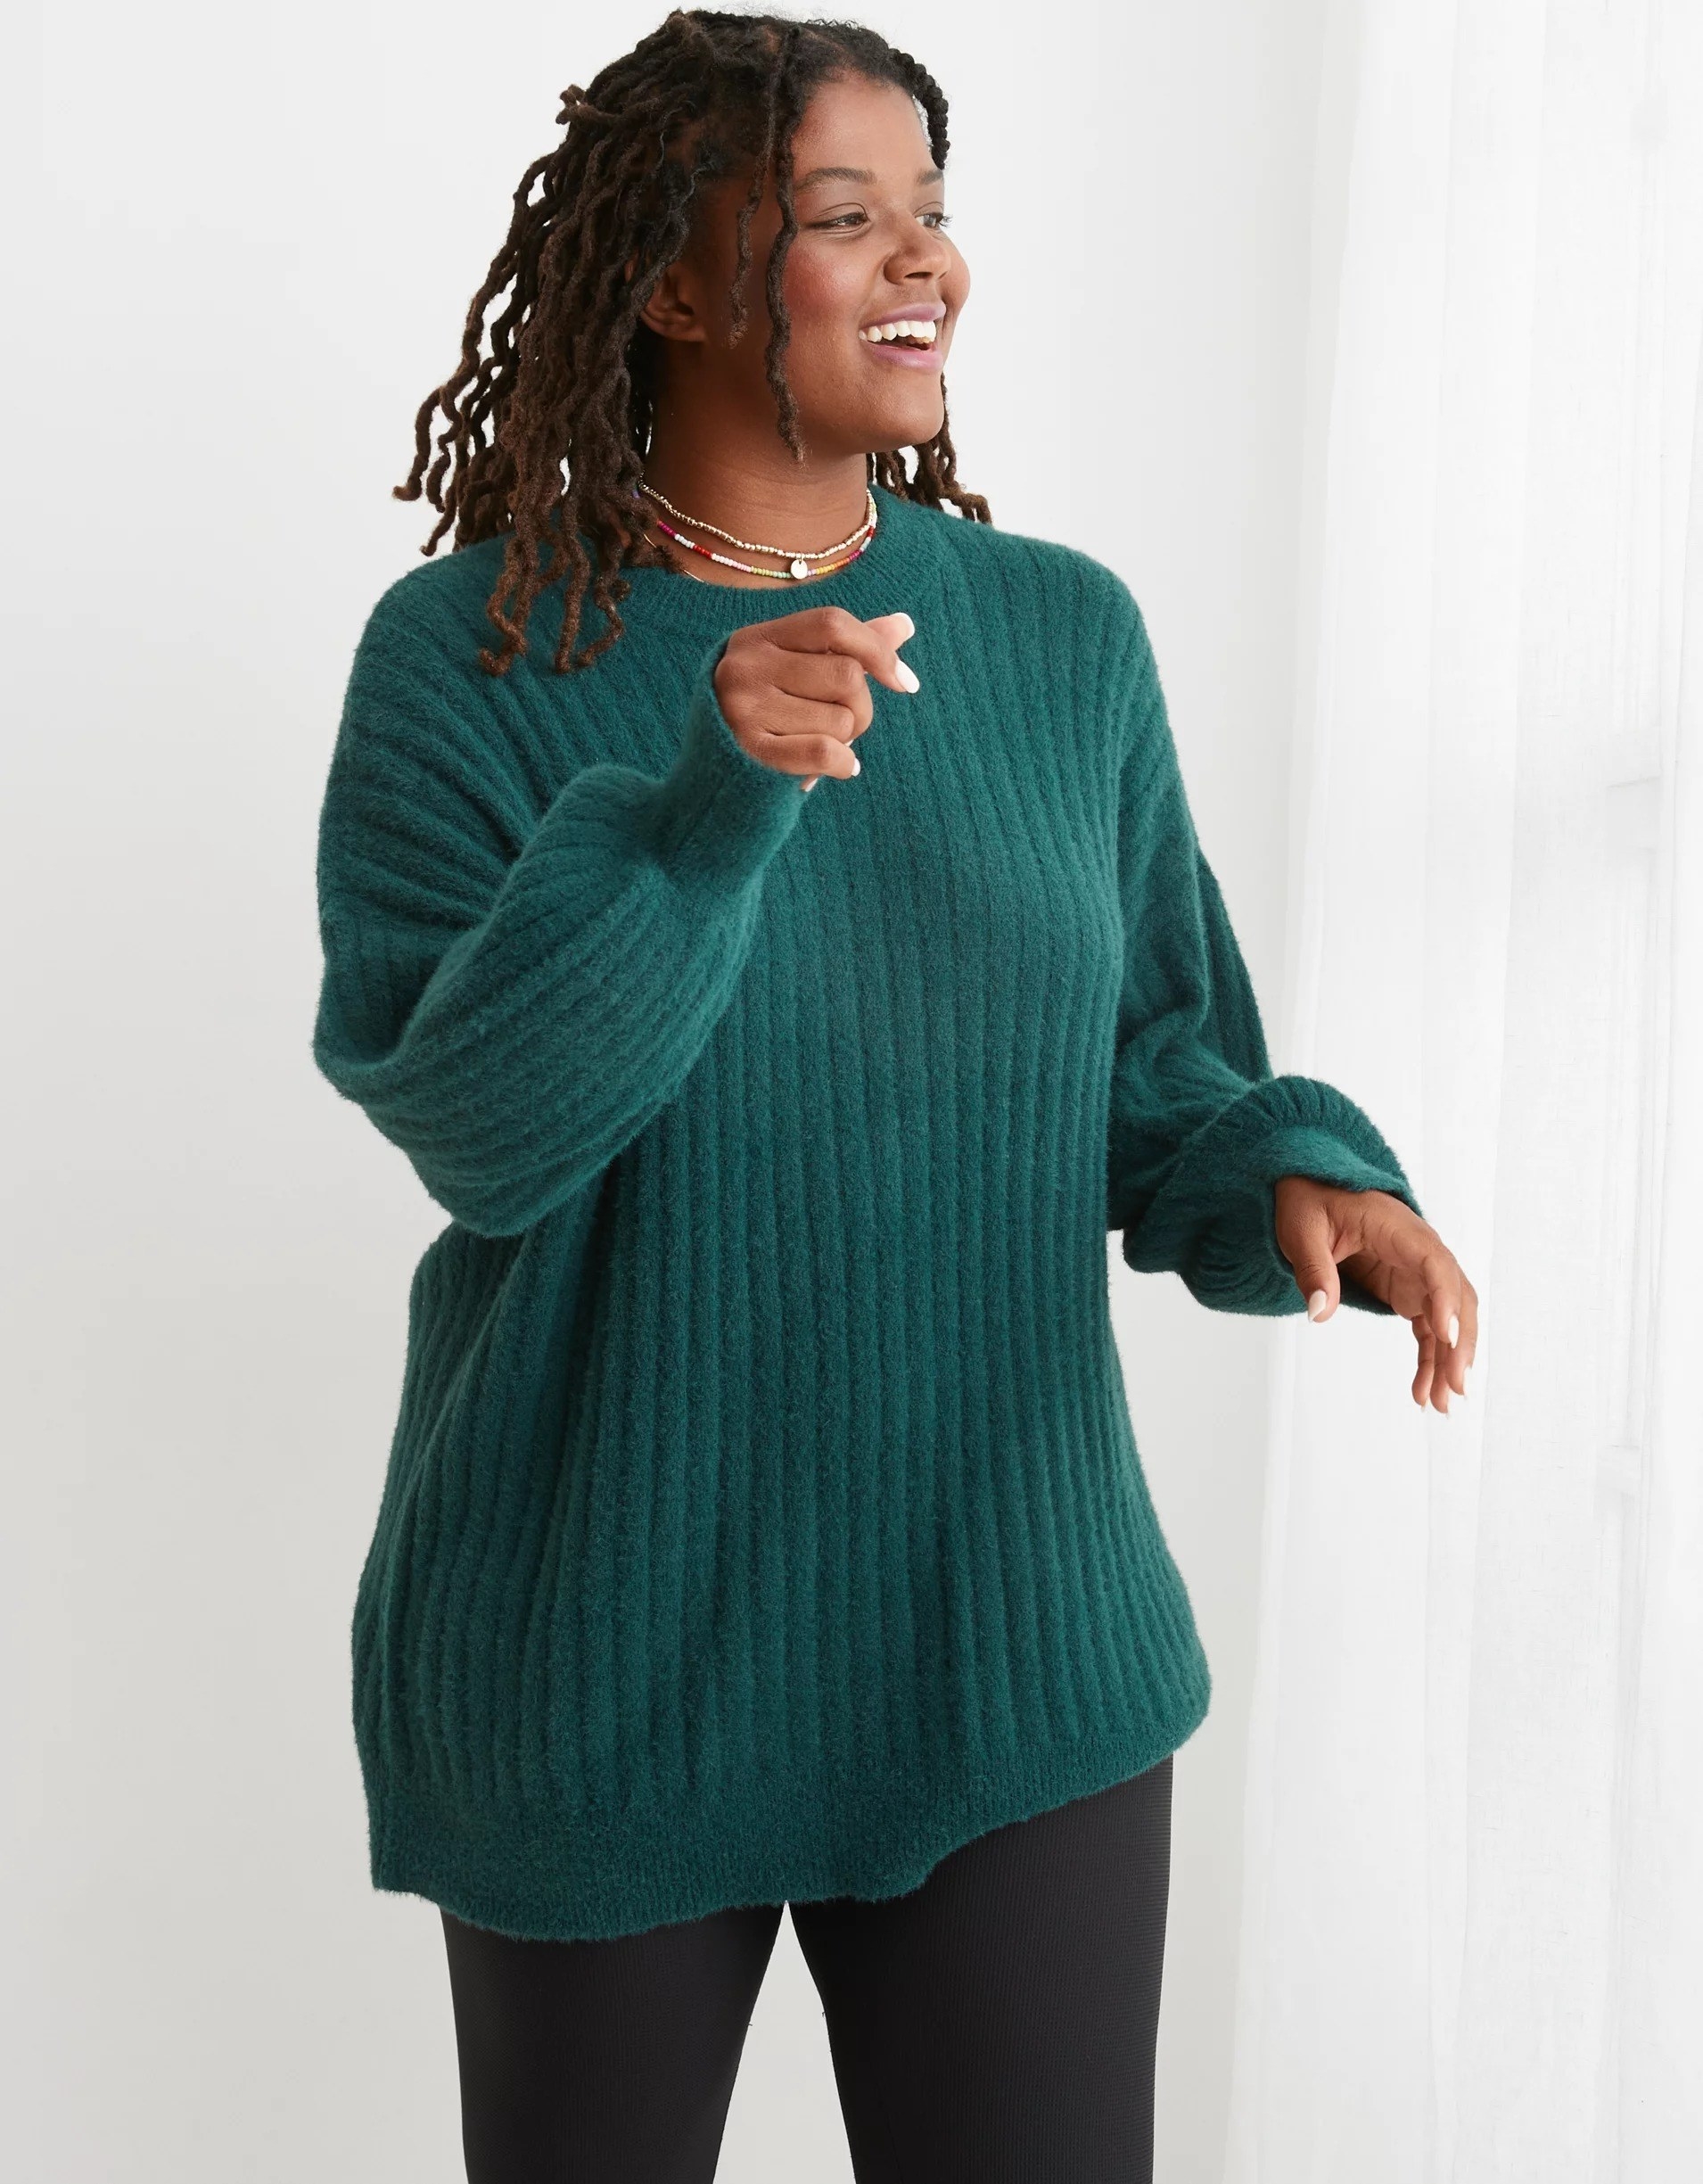 a model wearing the dark green sweater